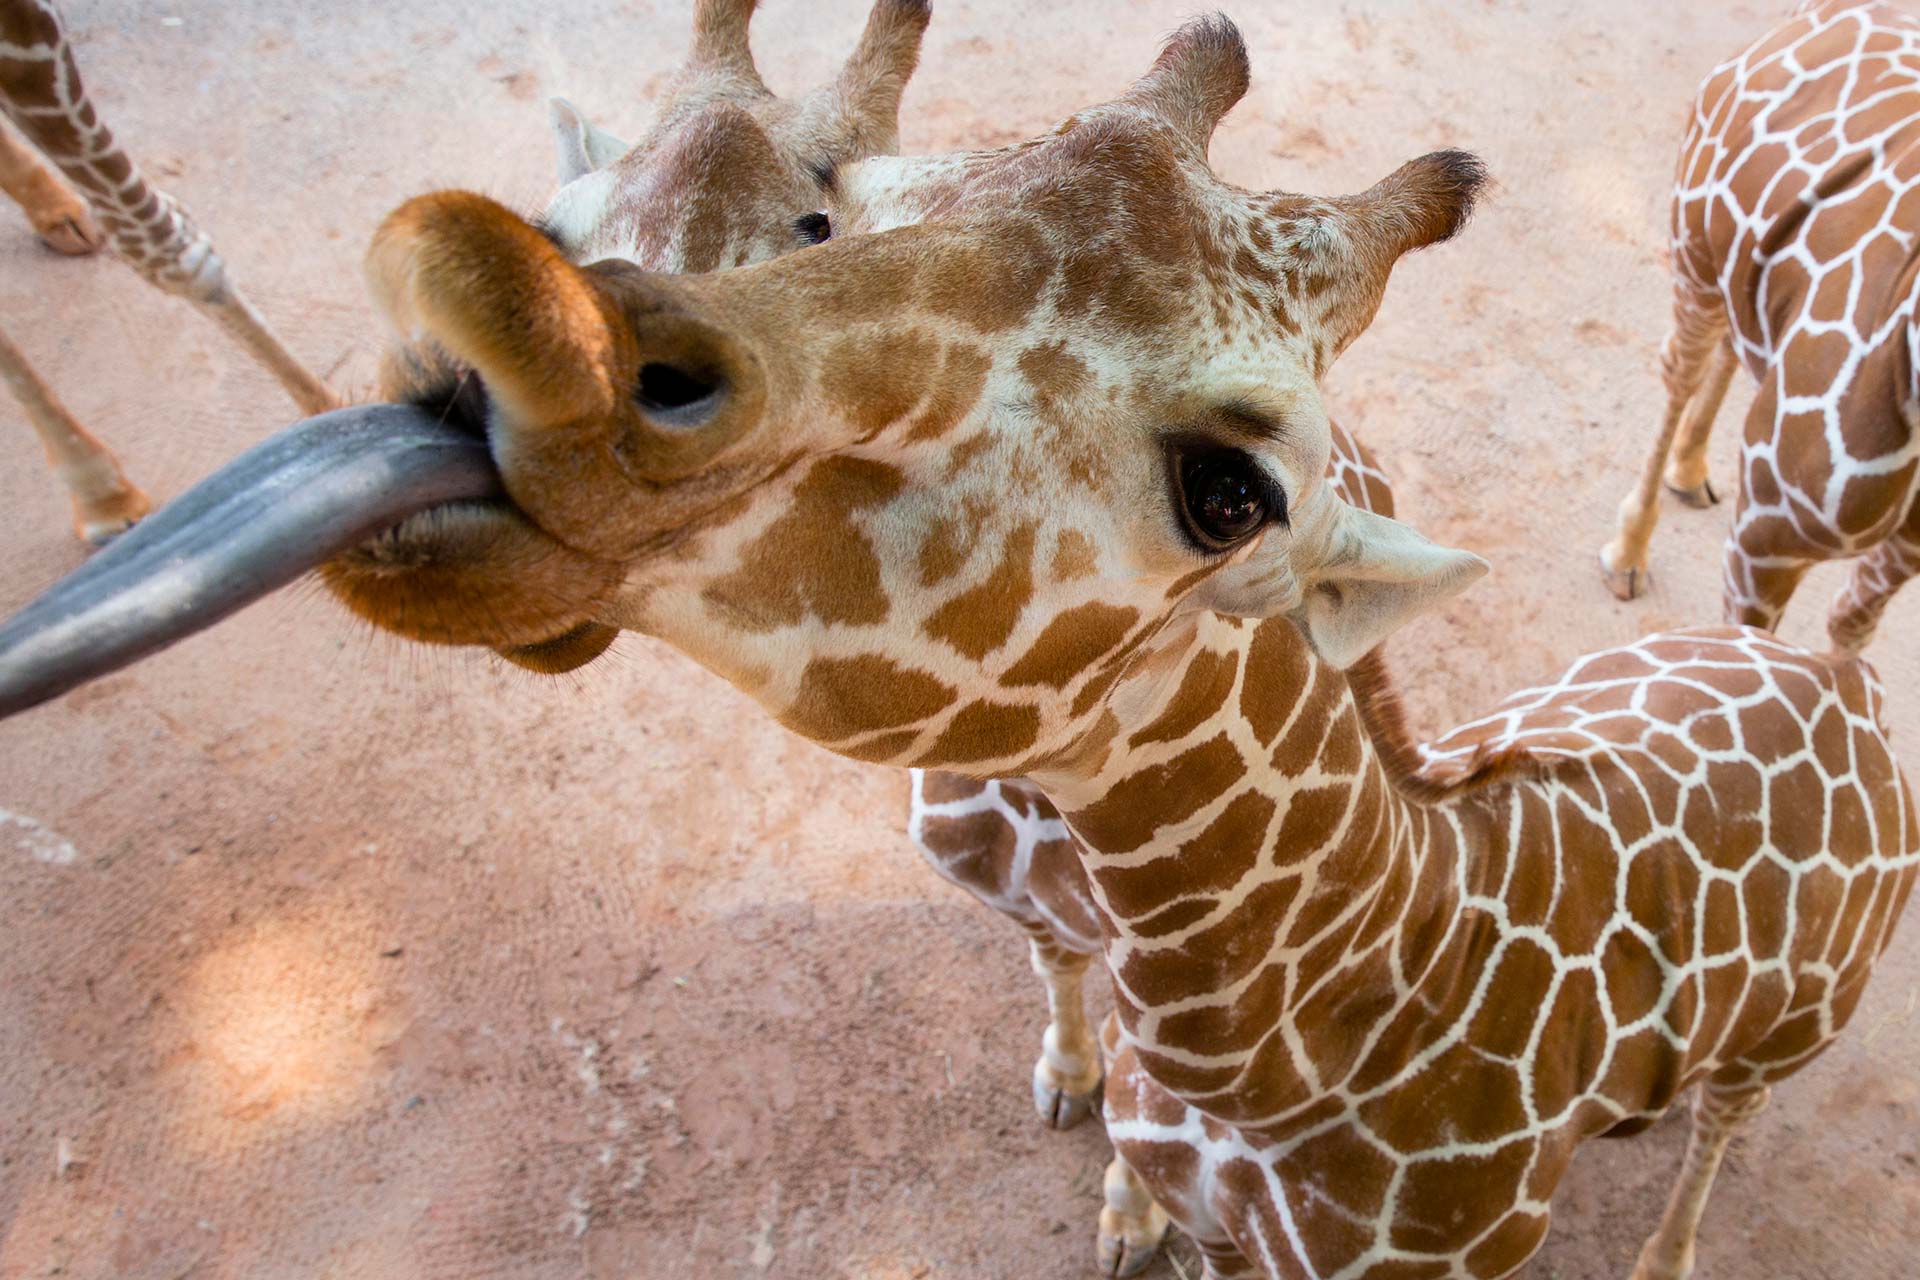 Giraffe - Zoo Atlanta